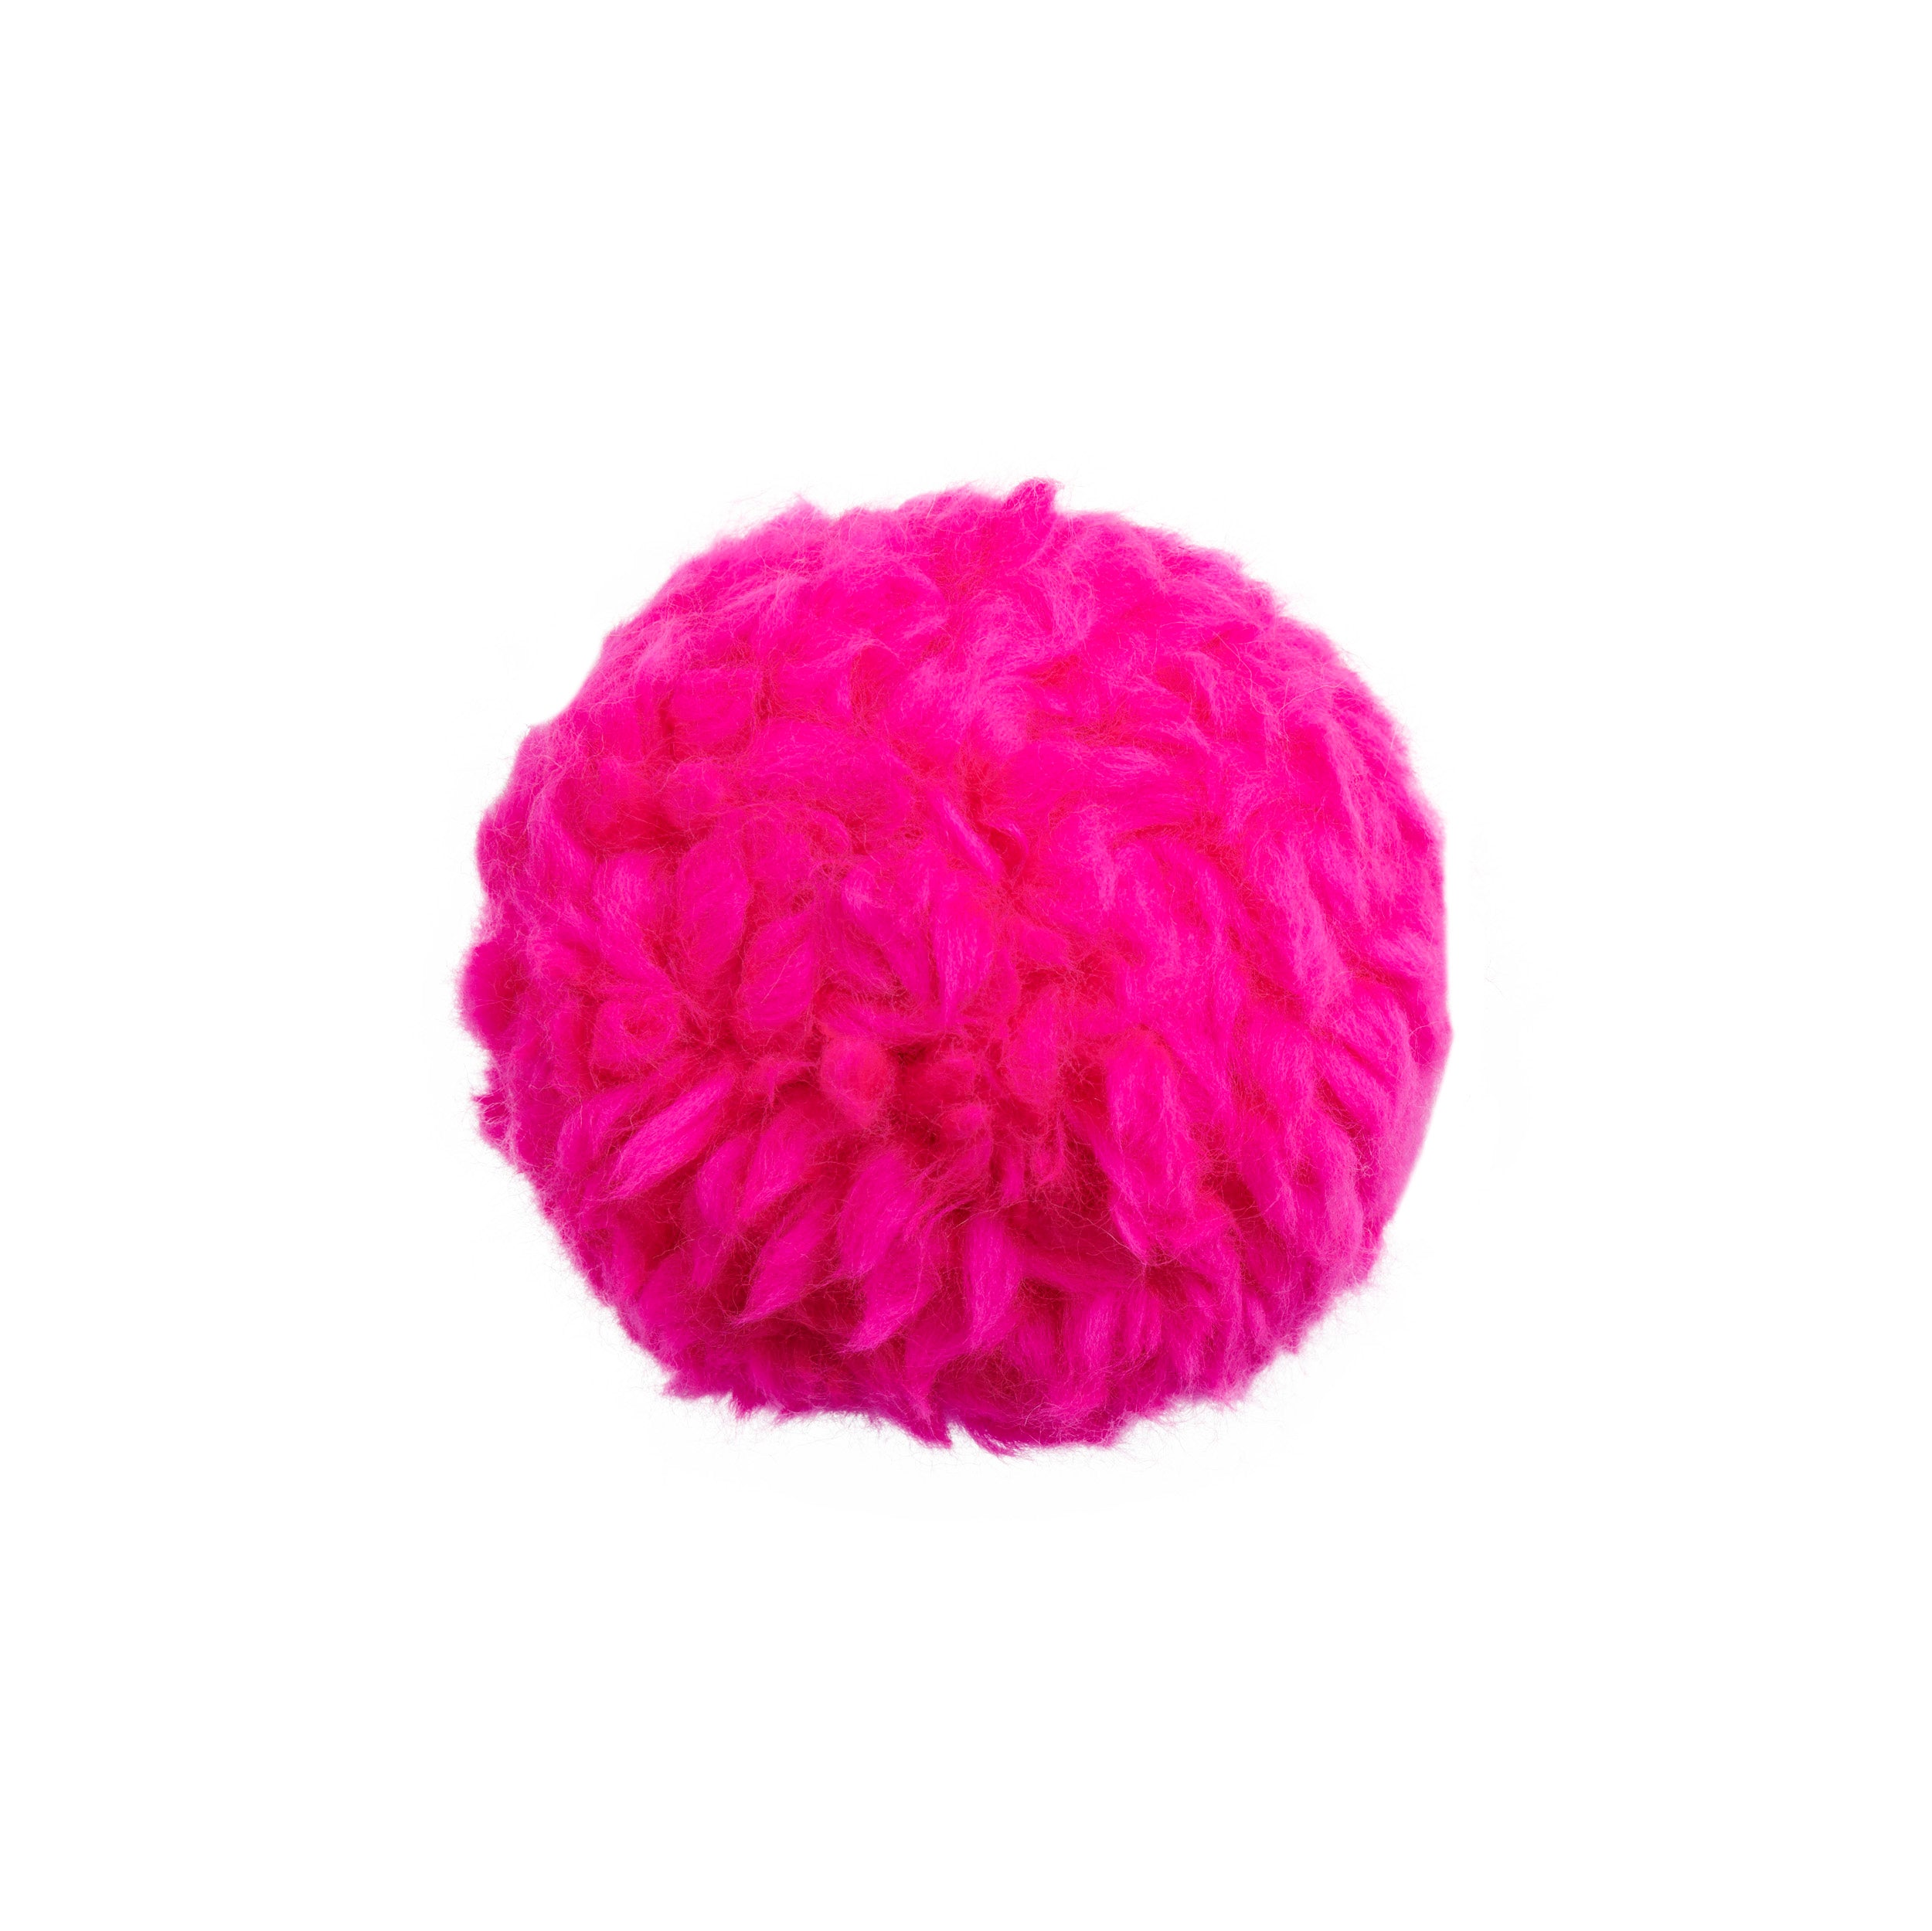 The Yarn Pom Pom | Winter Beanie Accessories | Sh*t That I Knit